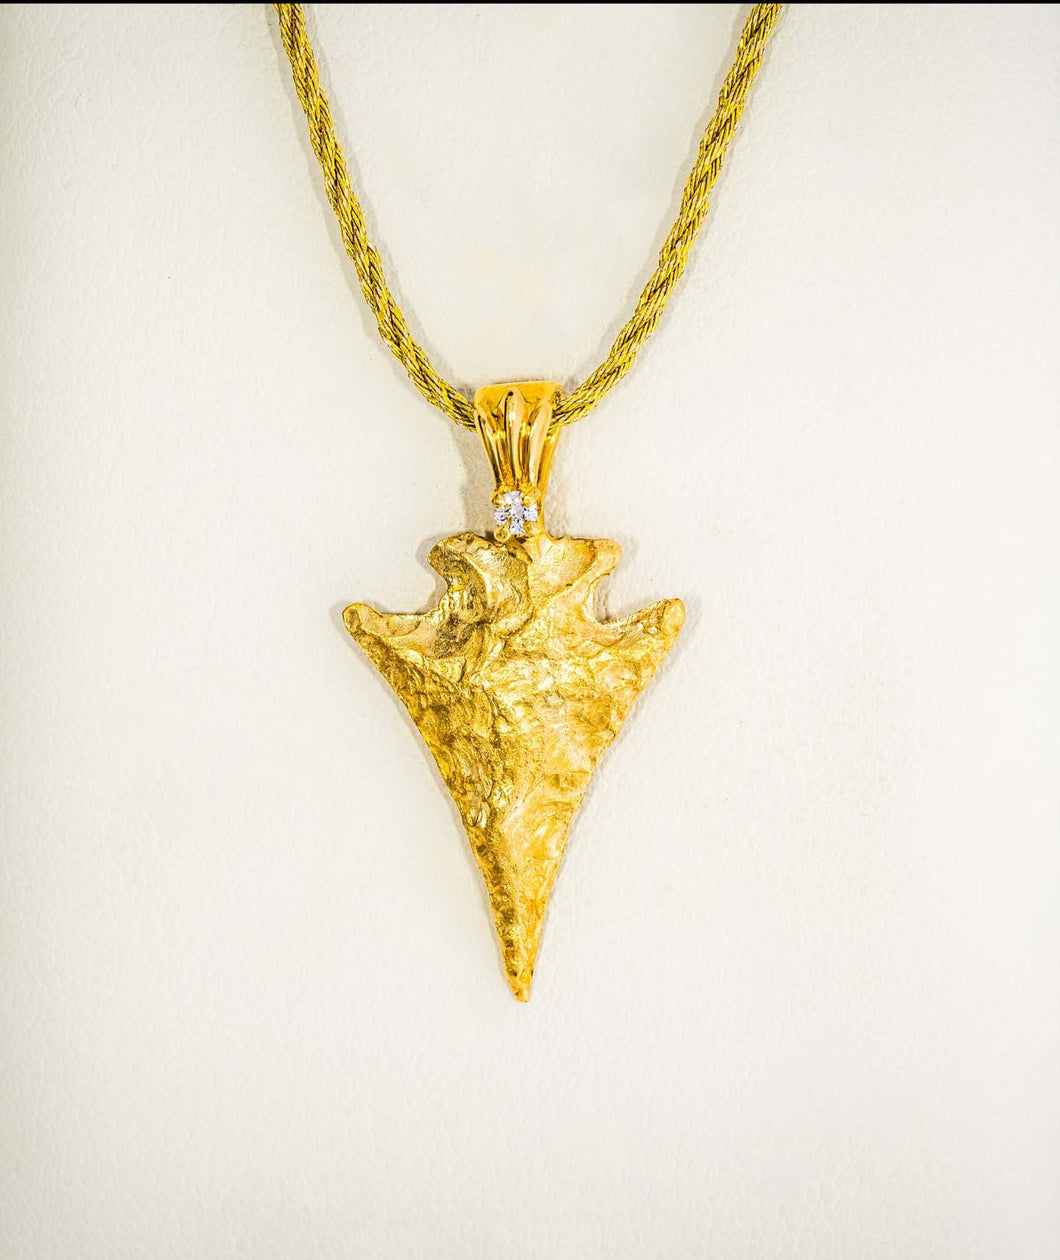 Gold Arrowhead Pendant by Paul Iwanaga